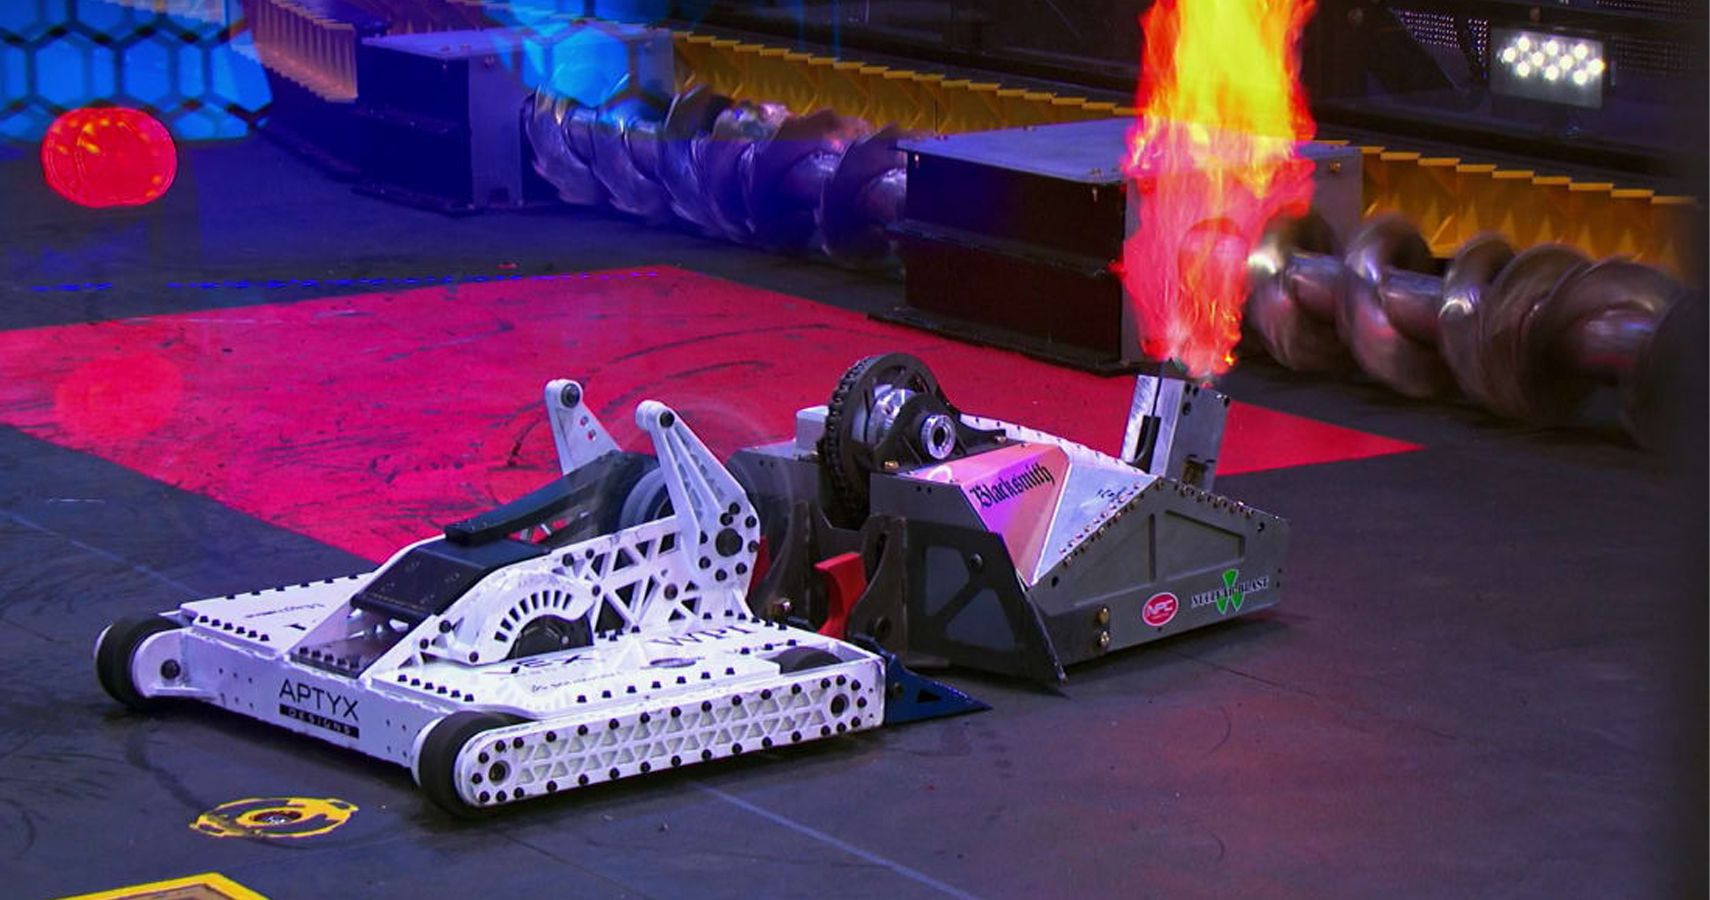 Битва роботов 1 4. Битвы роботов Дискавери. Битва роботов на арене шоу. Бронебот бои роботов. Битвы роботов Battlebots 2019.